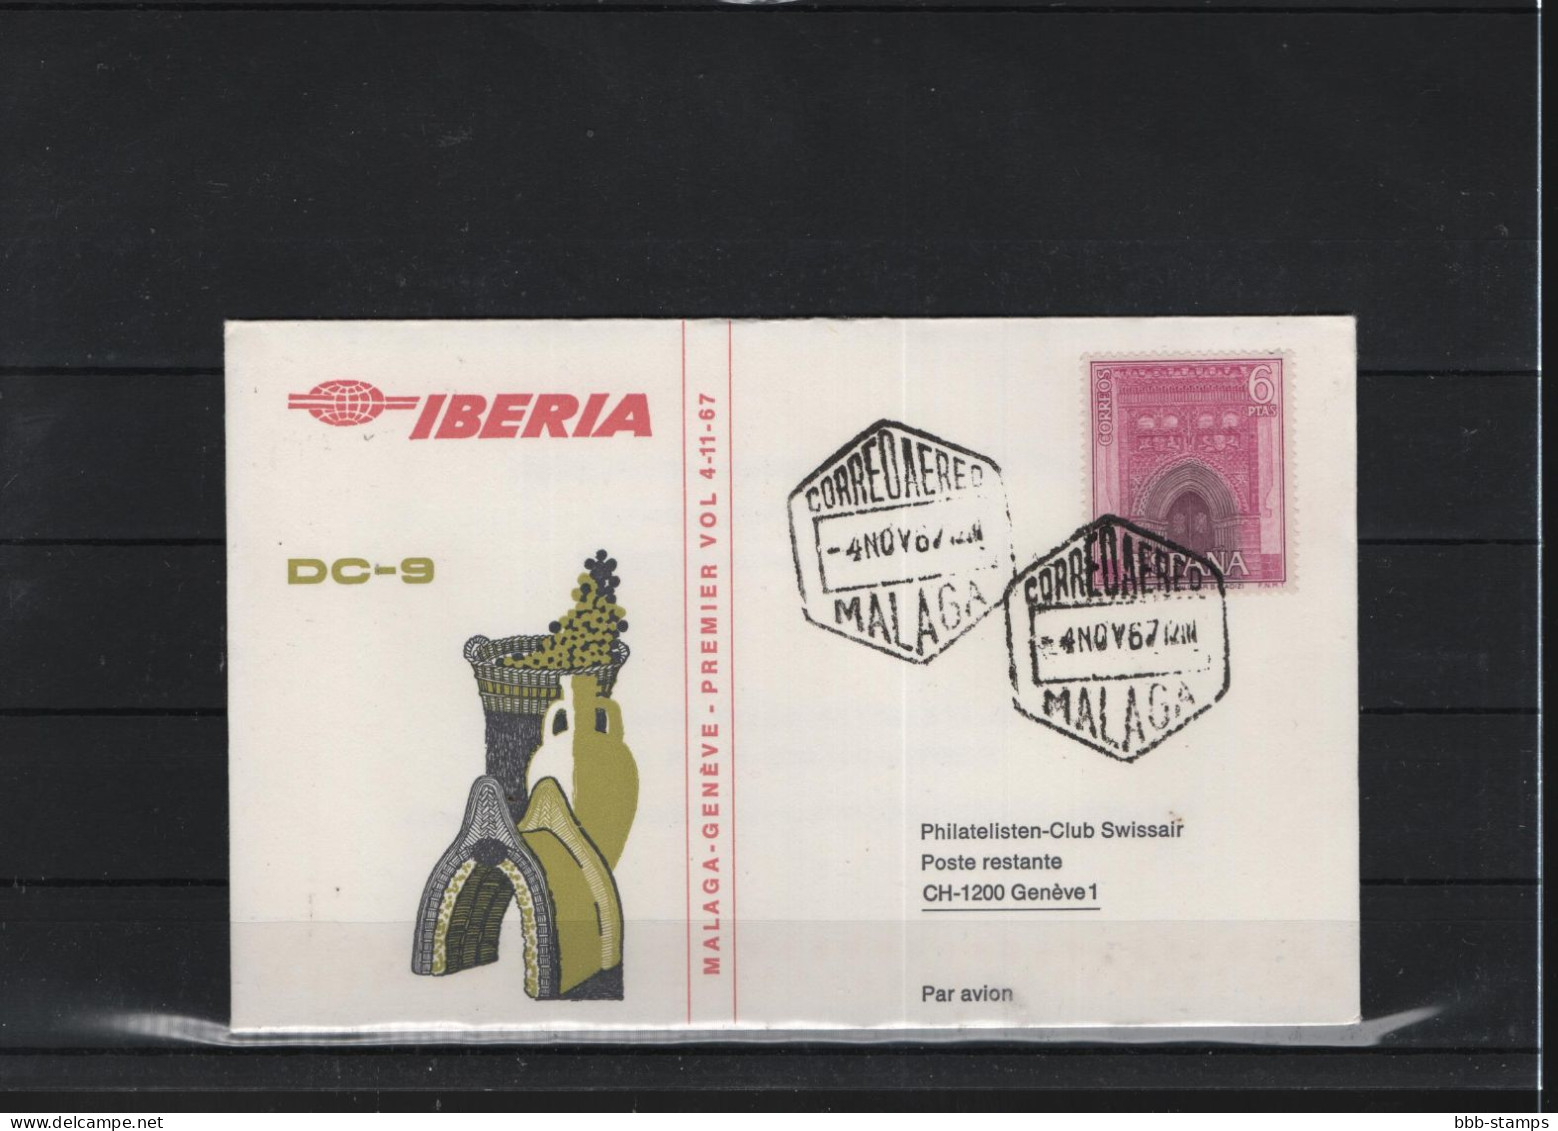 Schweiz Luftpost FFC Iberia 2.4.1968 Gebf - Malaga - Vv - Premiers Vols